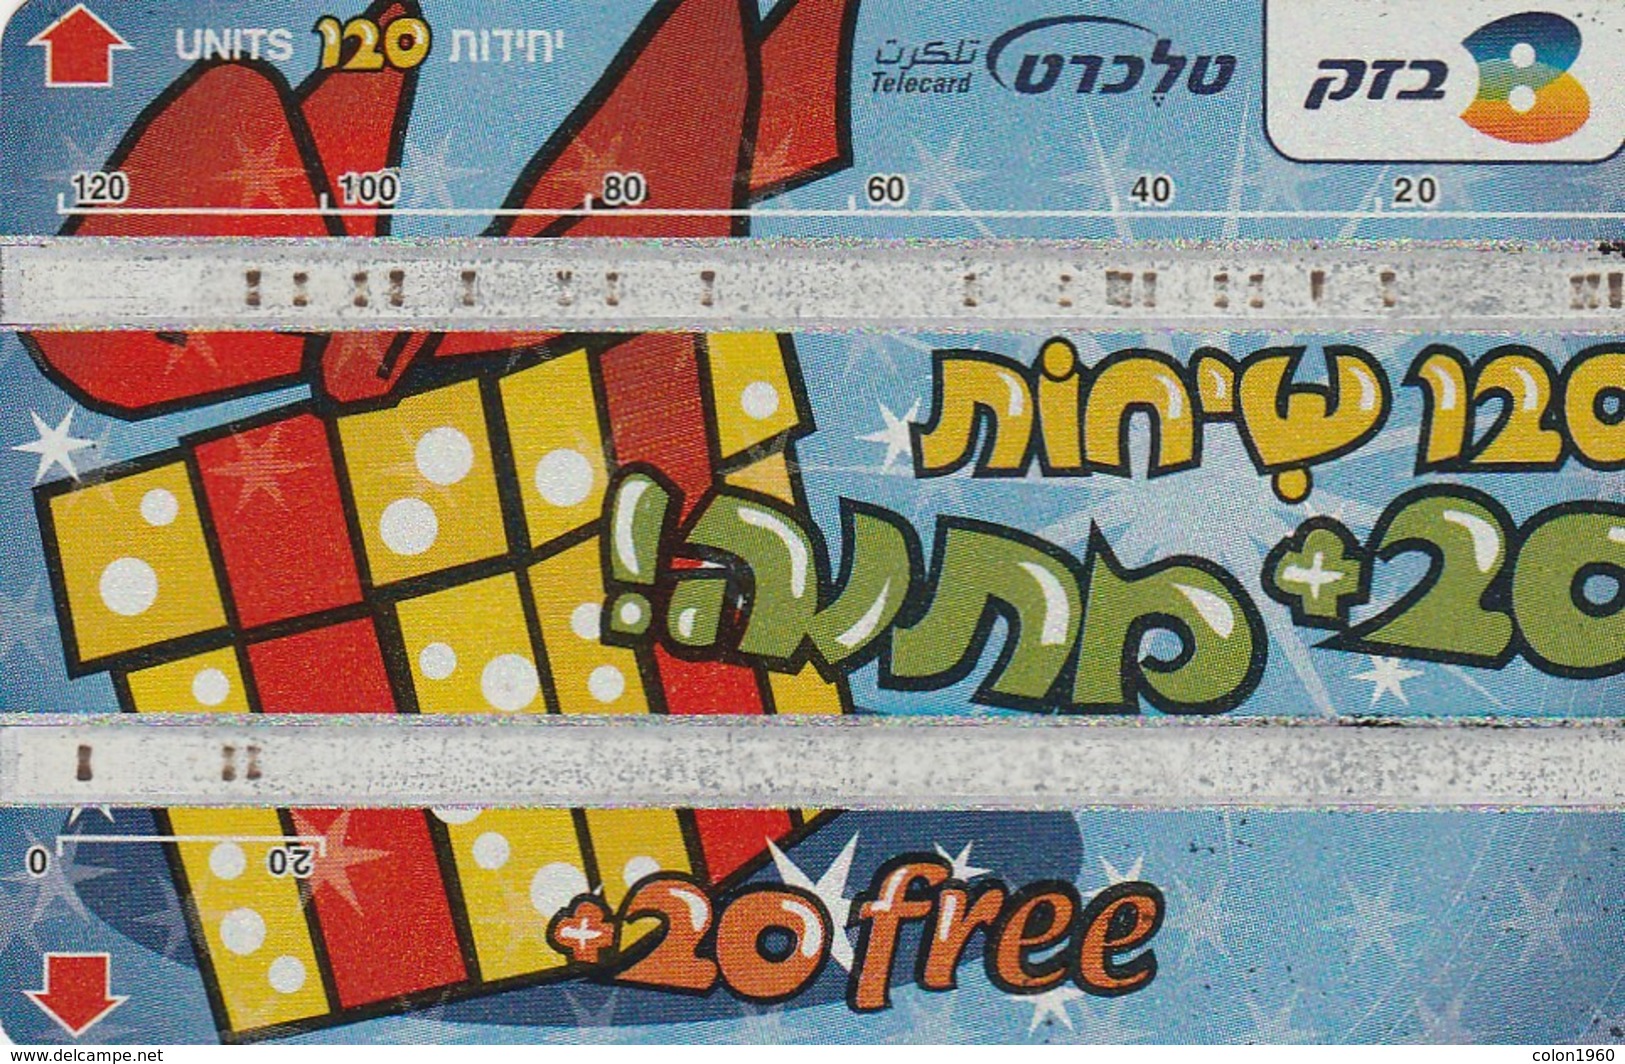 TARJETA TELEFONICA DE ISRAEL. 20 Units Free. 109A. BZ-320. (212). - Israel